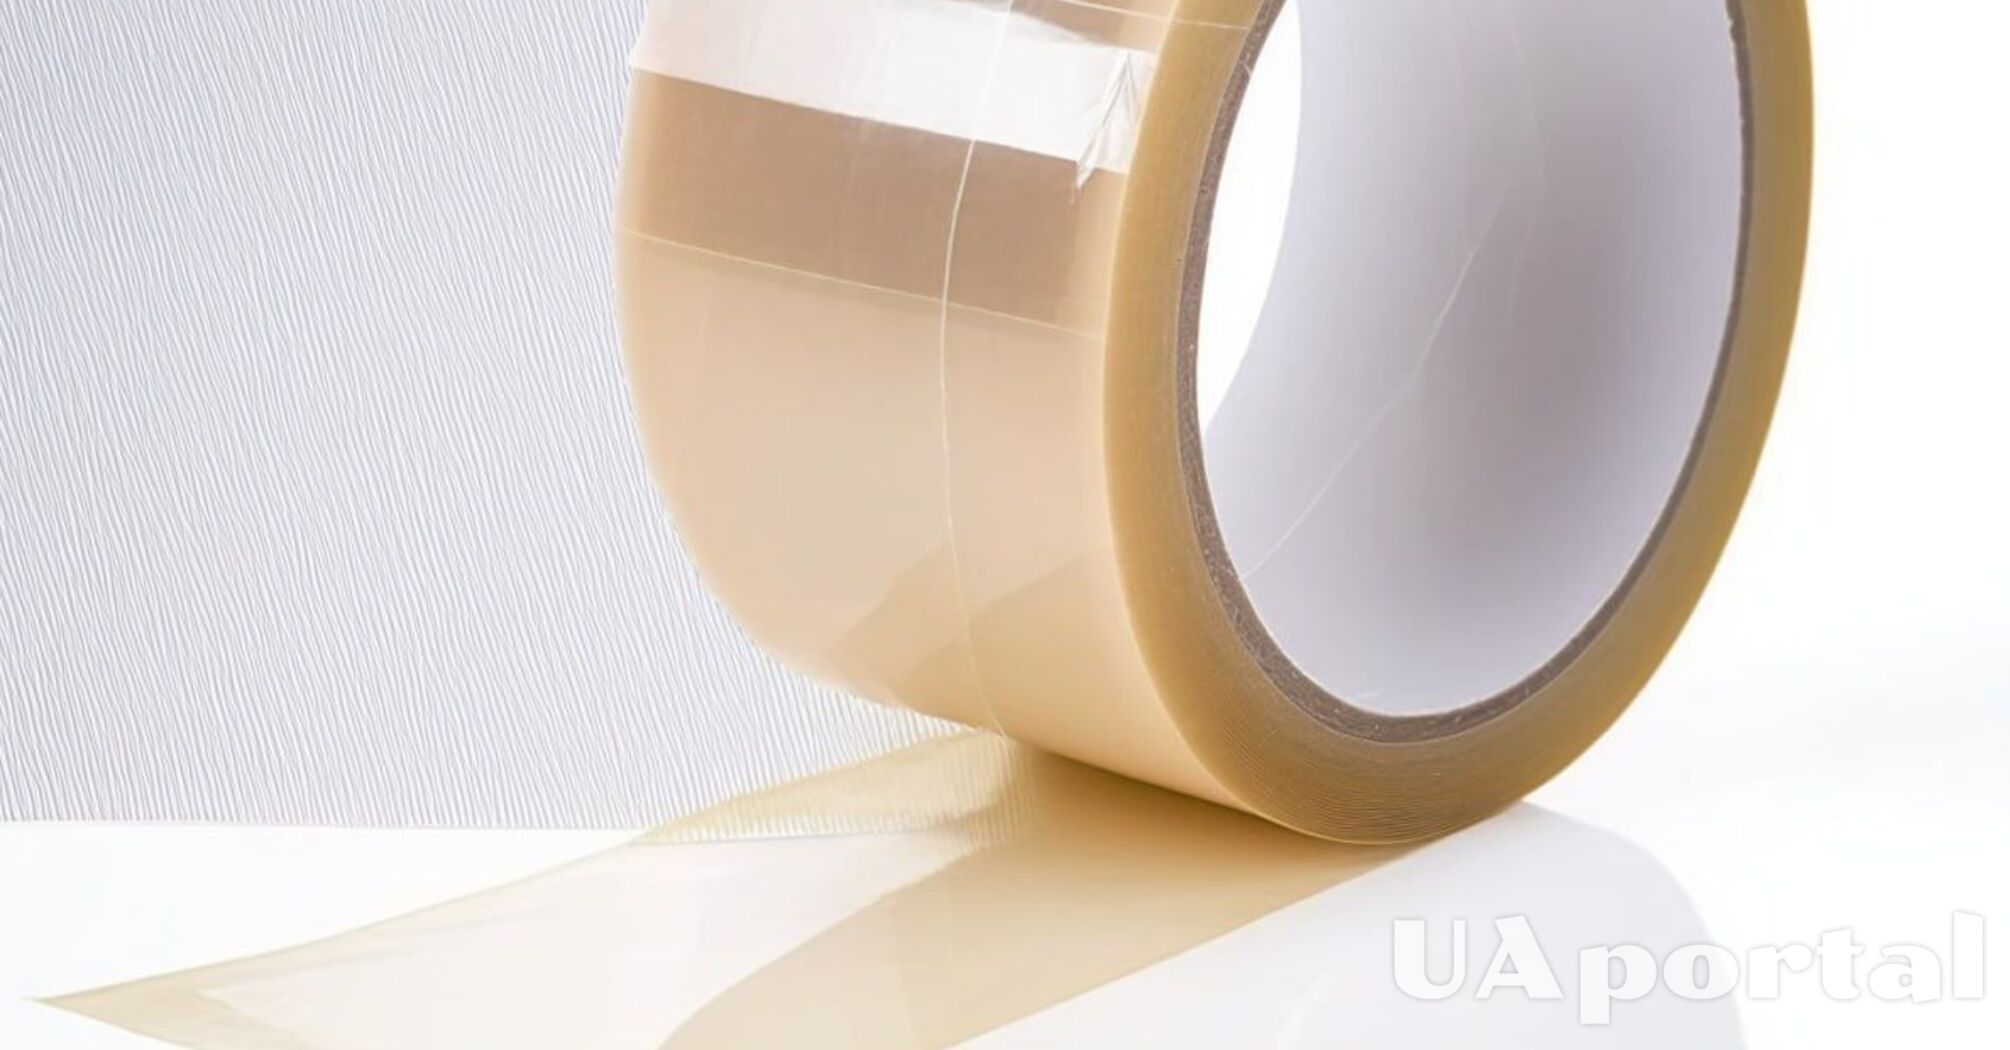 How adhesive tape can make life easier: hacks